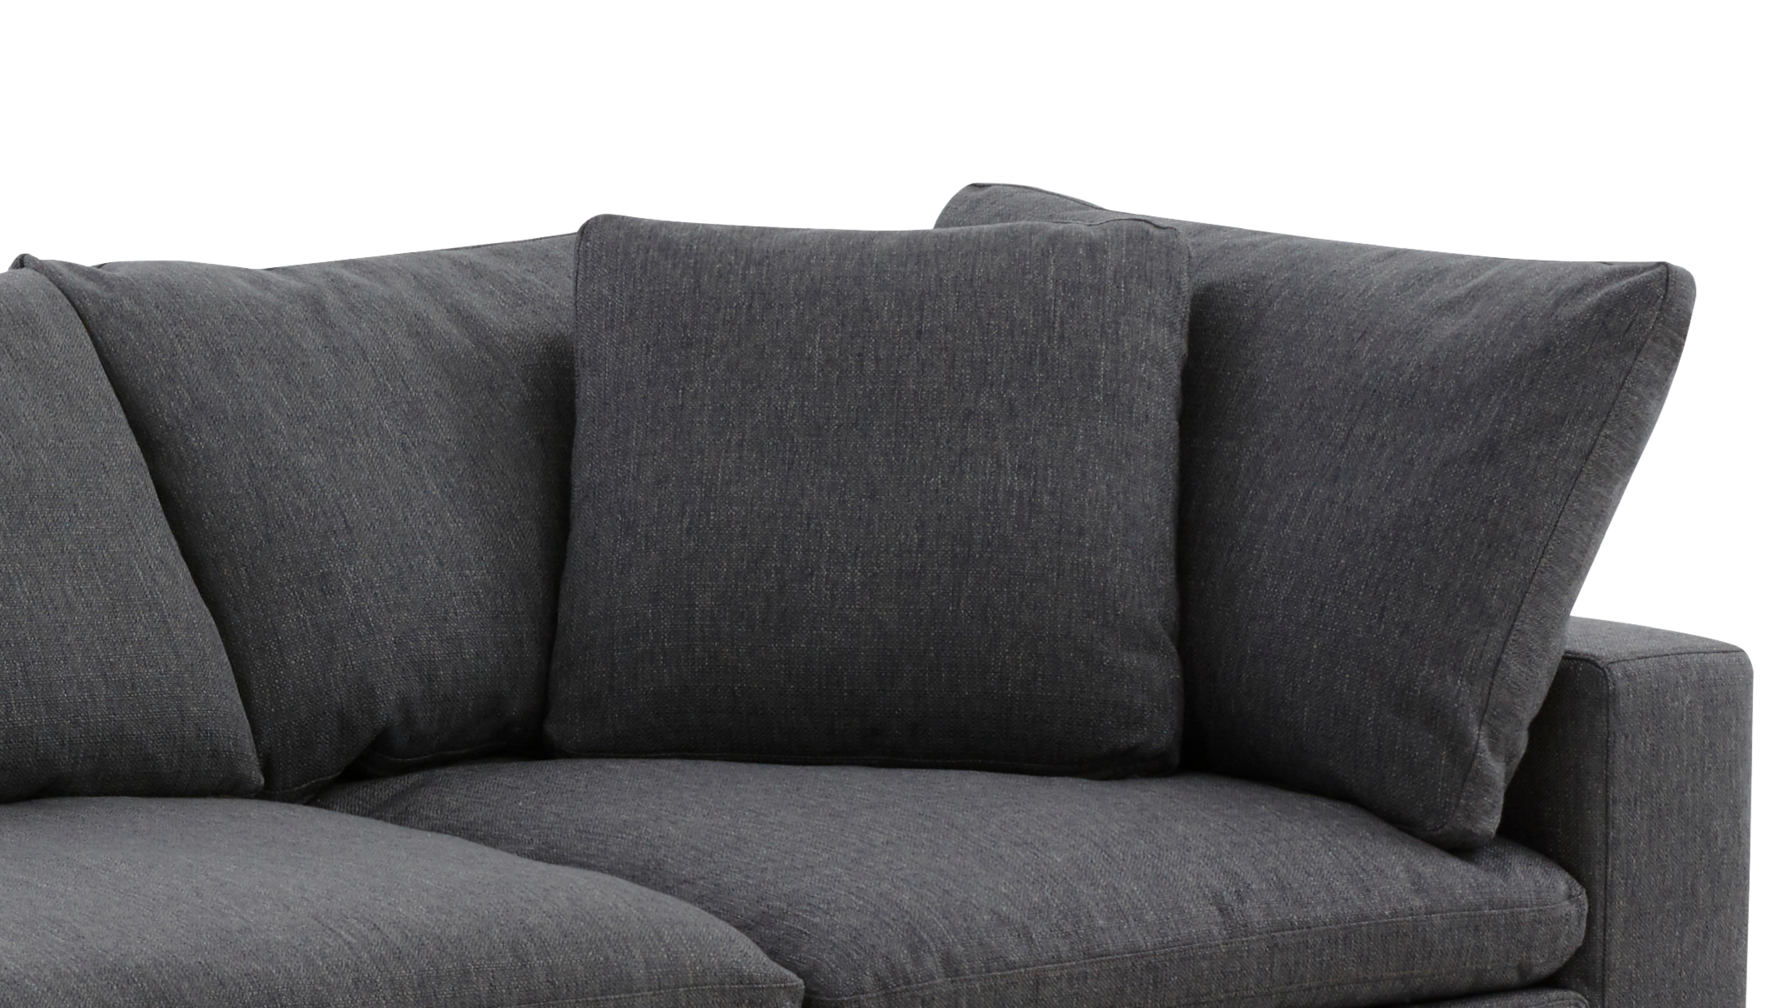 Movie Night™ 3-Piece Modular Sofa, Standard, Dark Shadow - Image 8